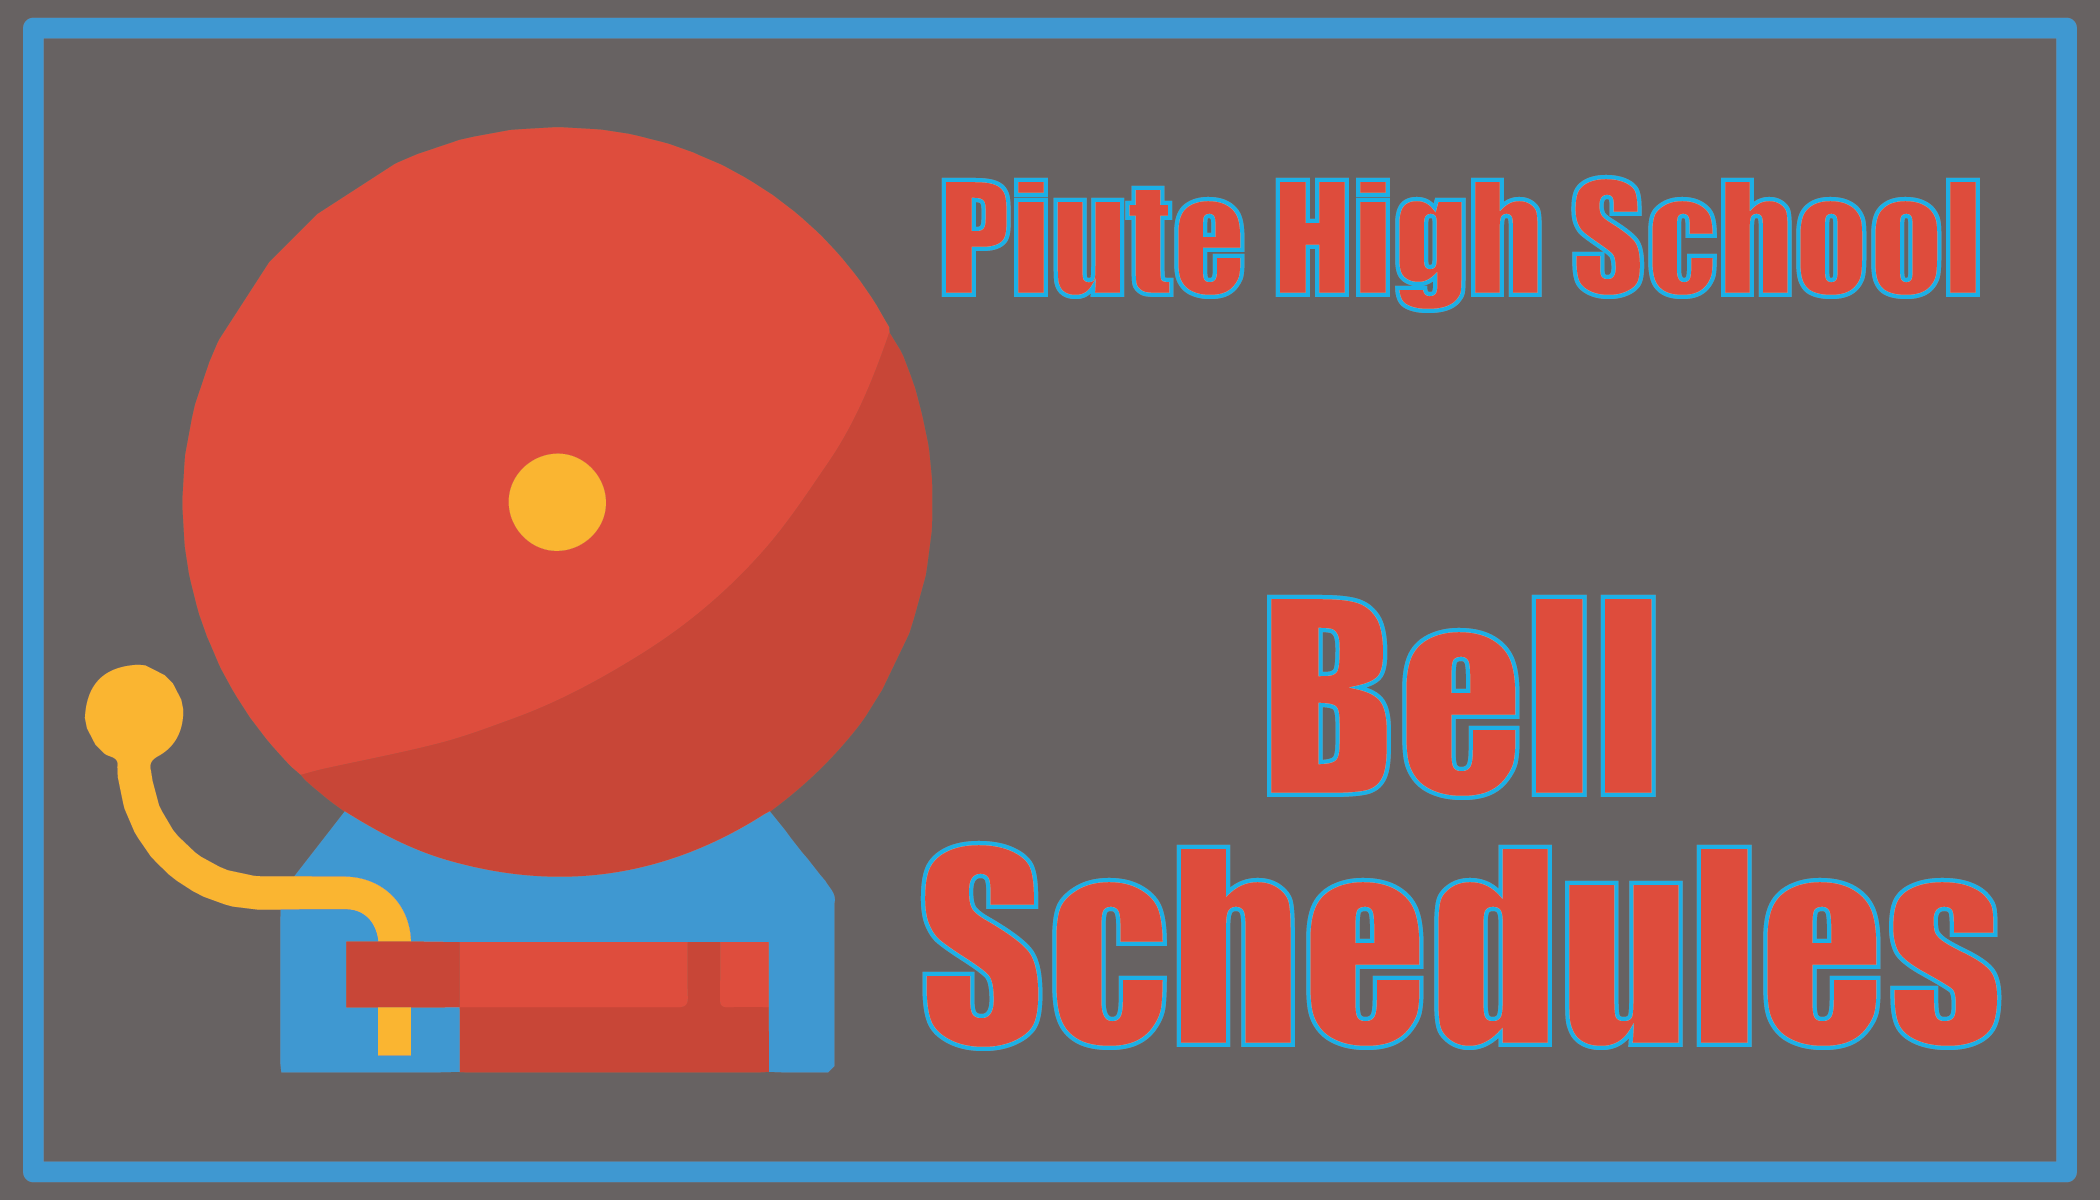 PHS Bell Schedule